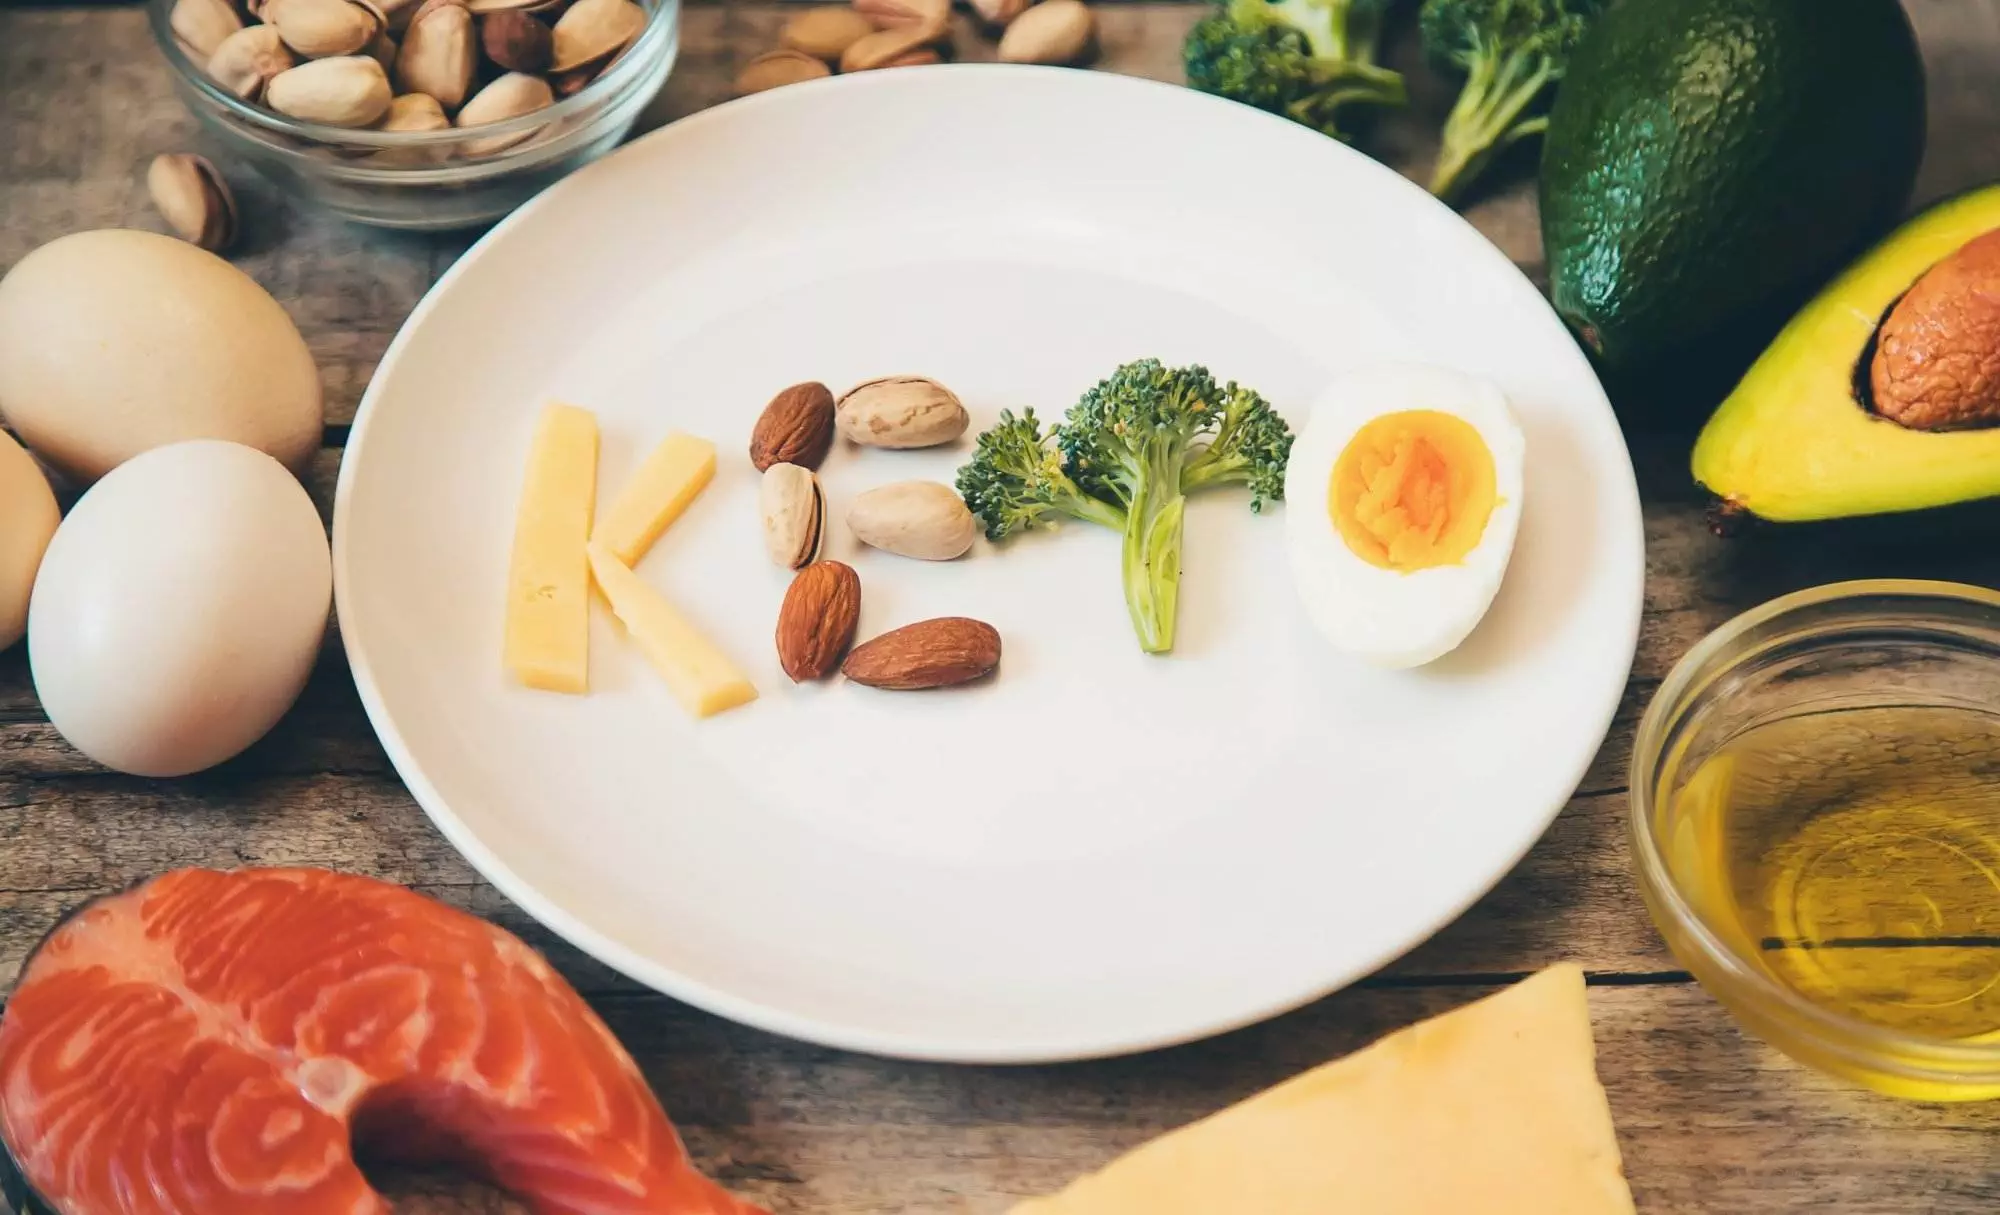 Healthy foods spelling KETO on plate